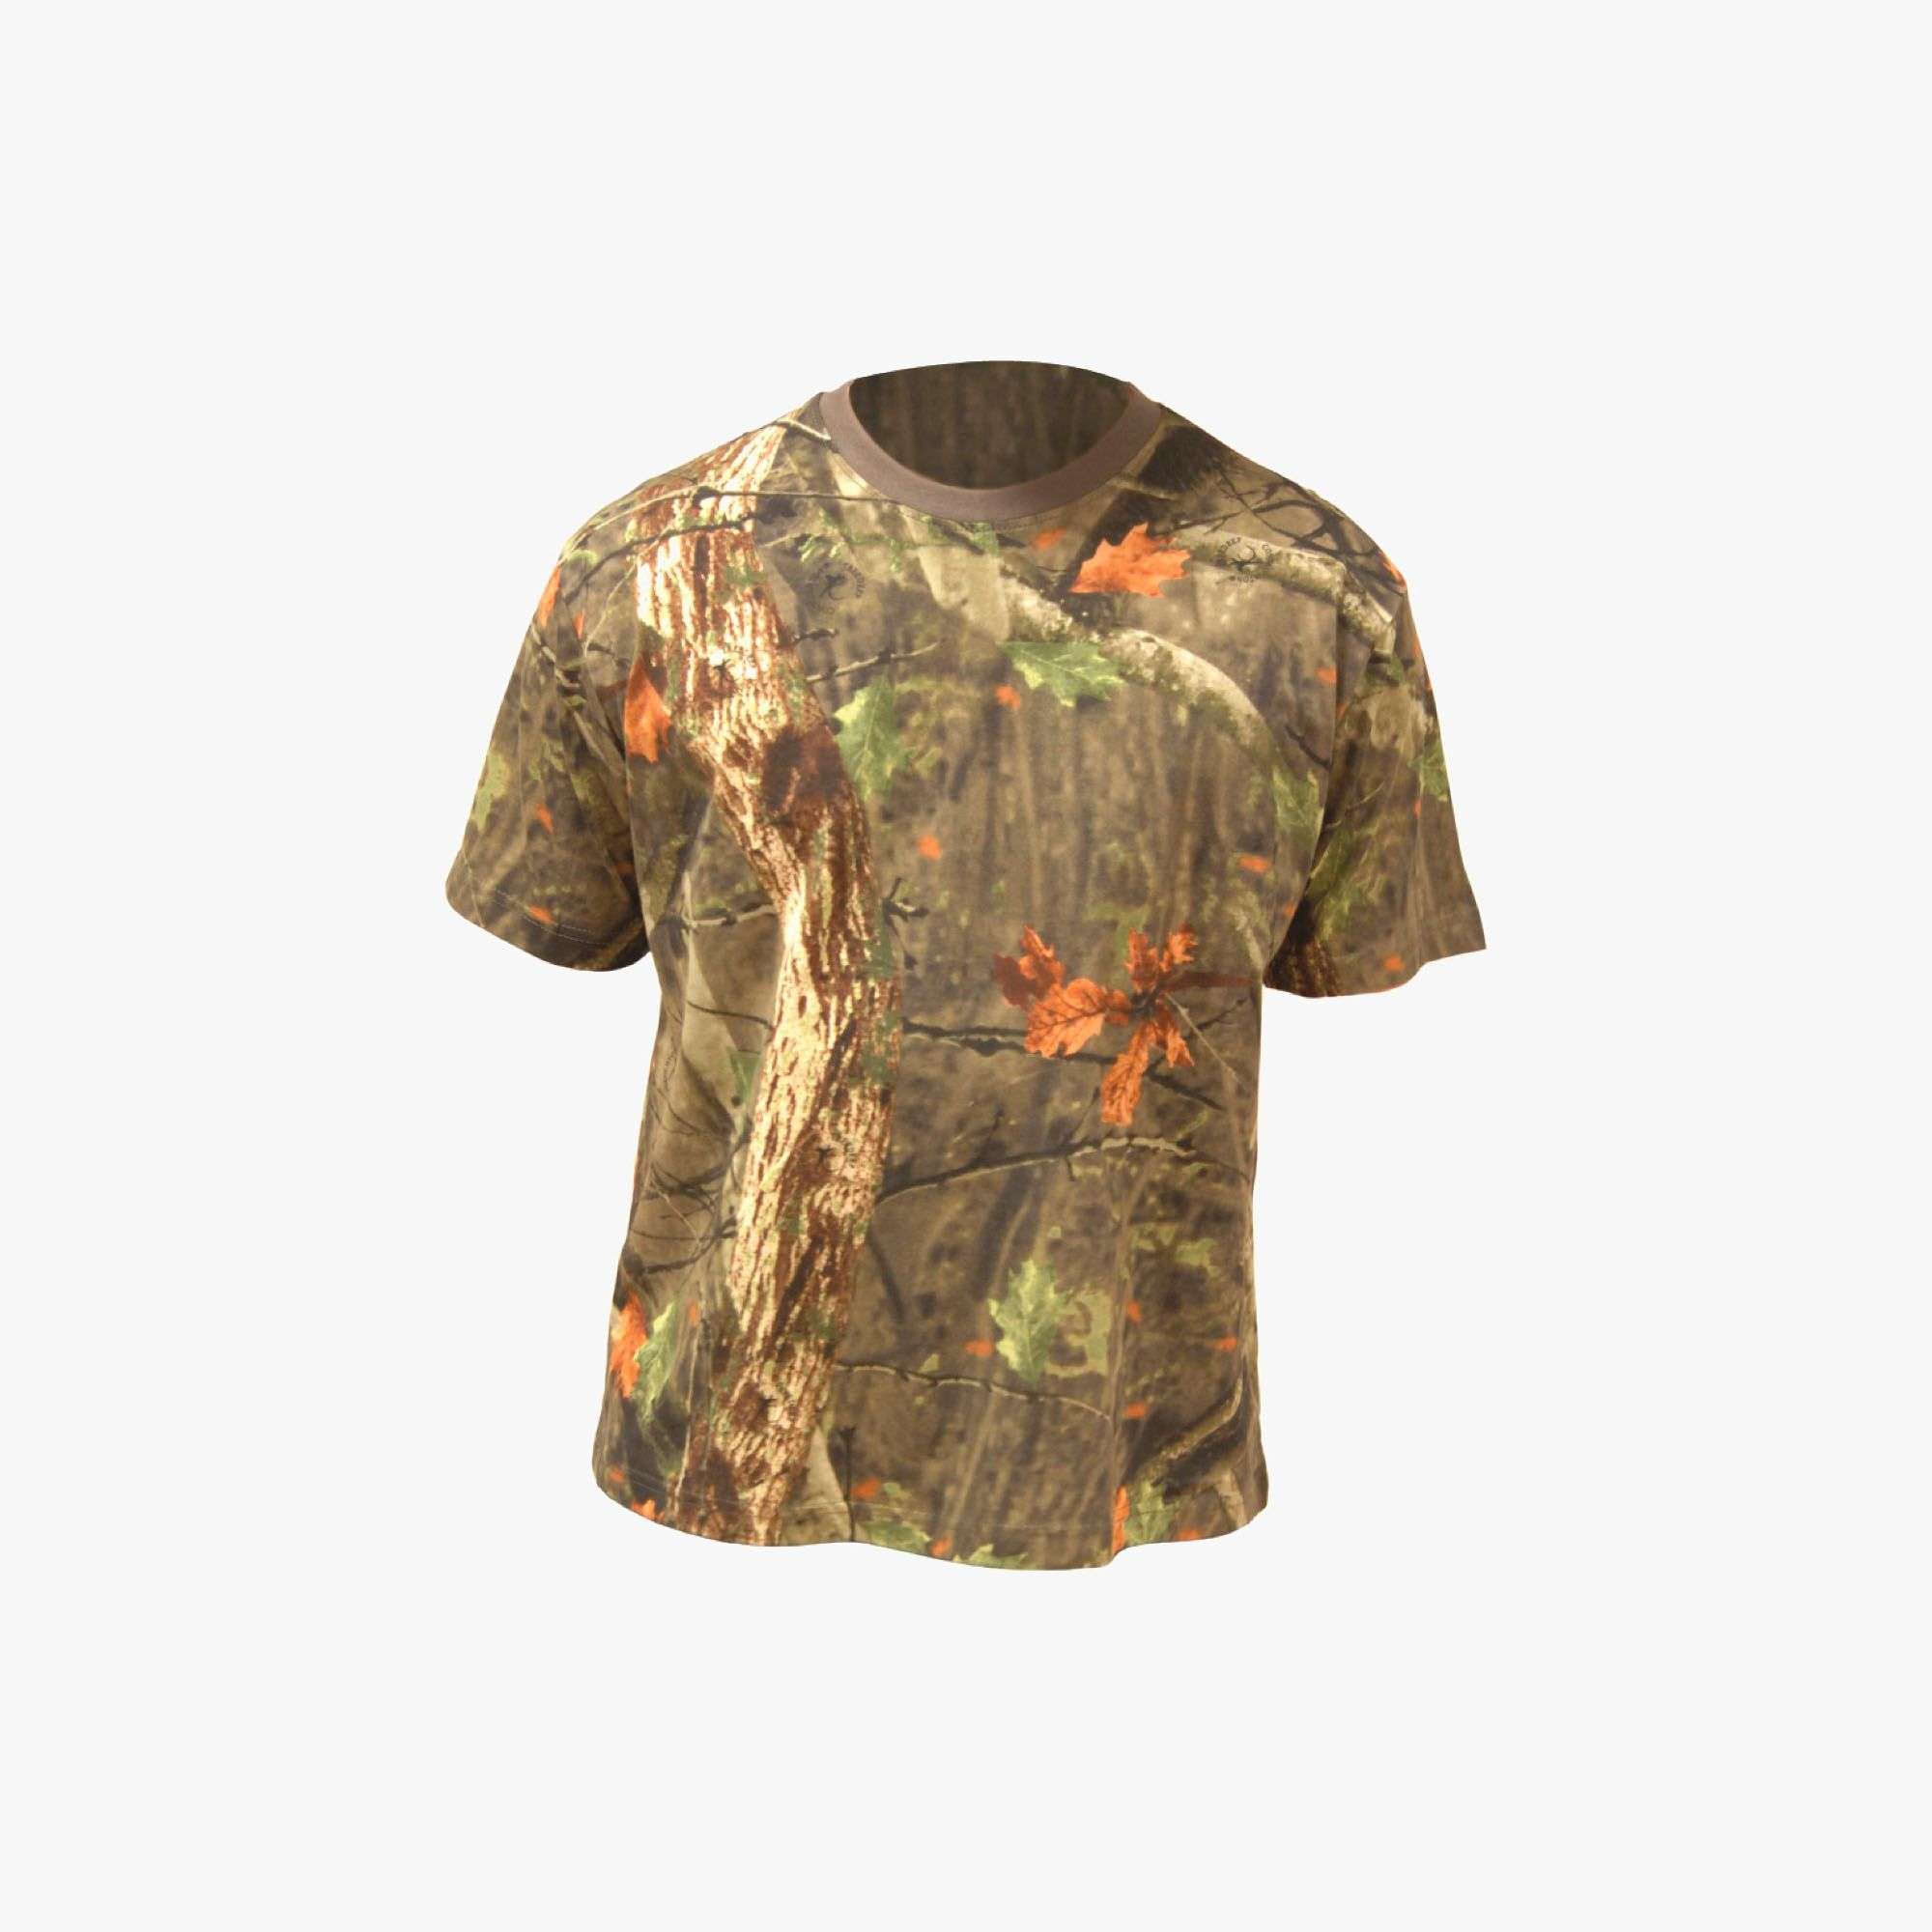 Highlander, Highlander Tree Deep T-Shirt, T-Shirts, Shirts & Vests, Wylies Outdoor World,